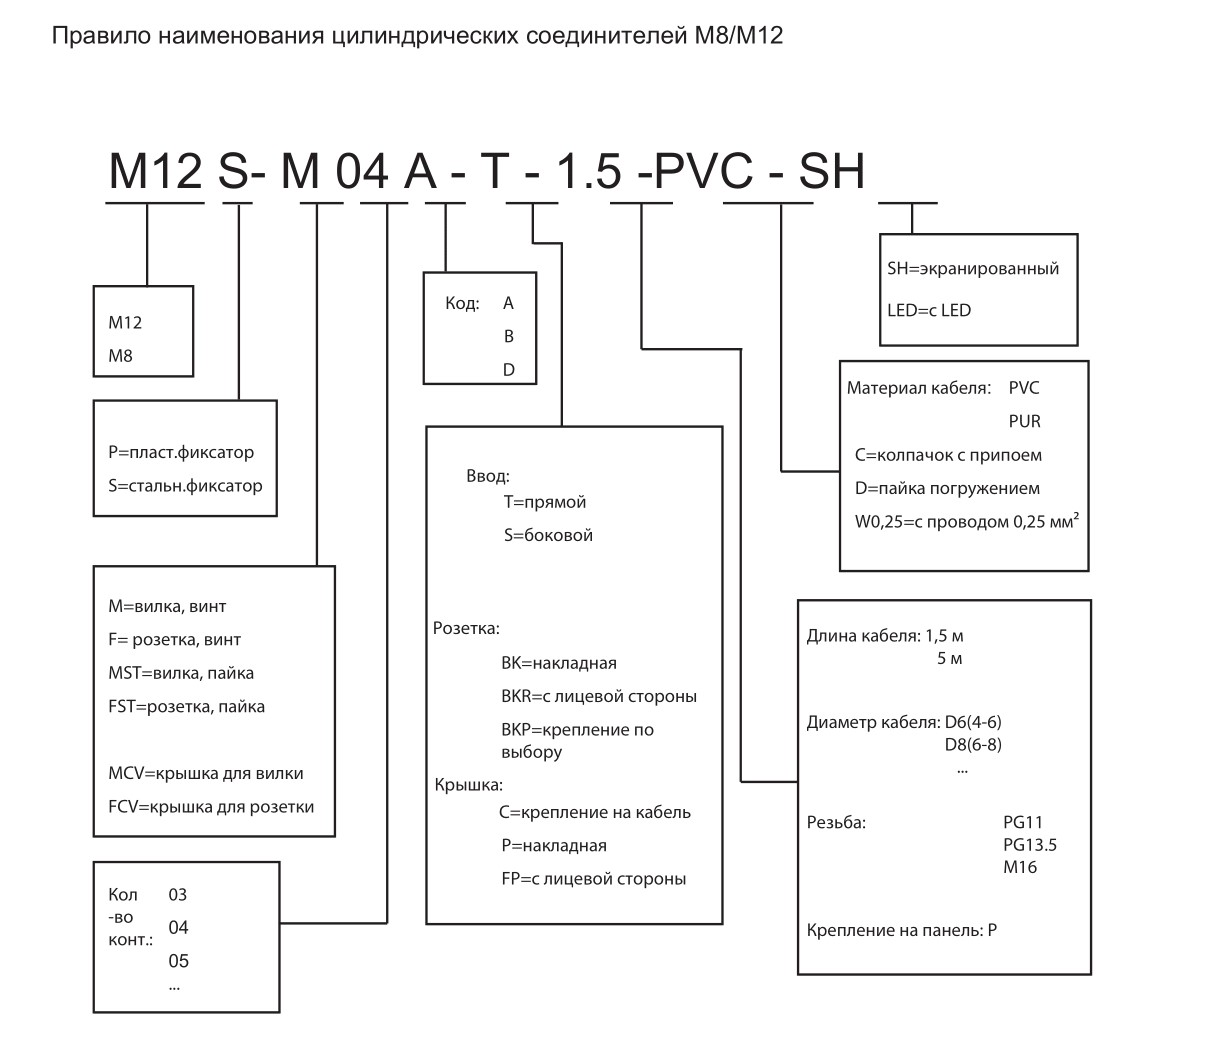 Цилиндрический соединитель-вилка с кабелем M12-M04D-BKR-M16-15.0-PUR-PFN 1630043014027: Структура обозначения